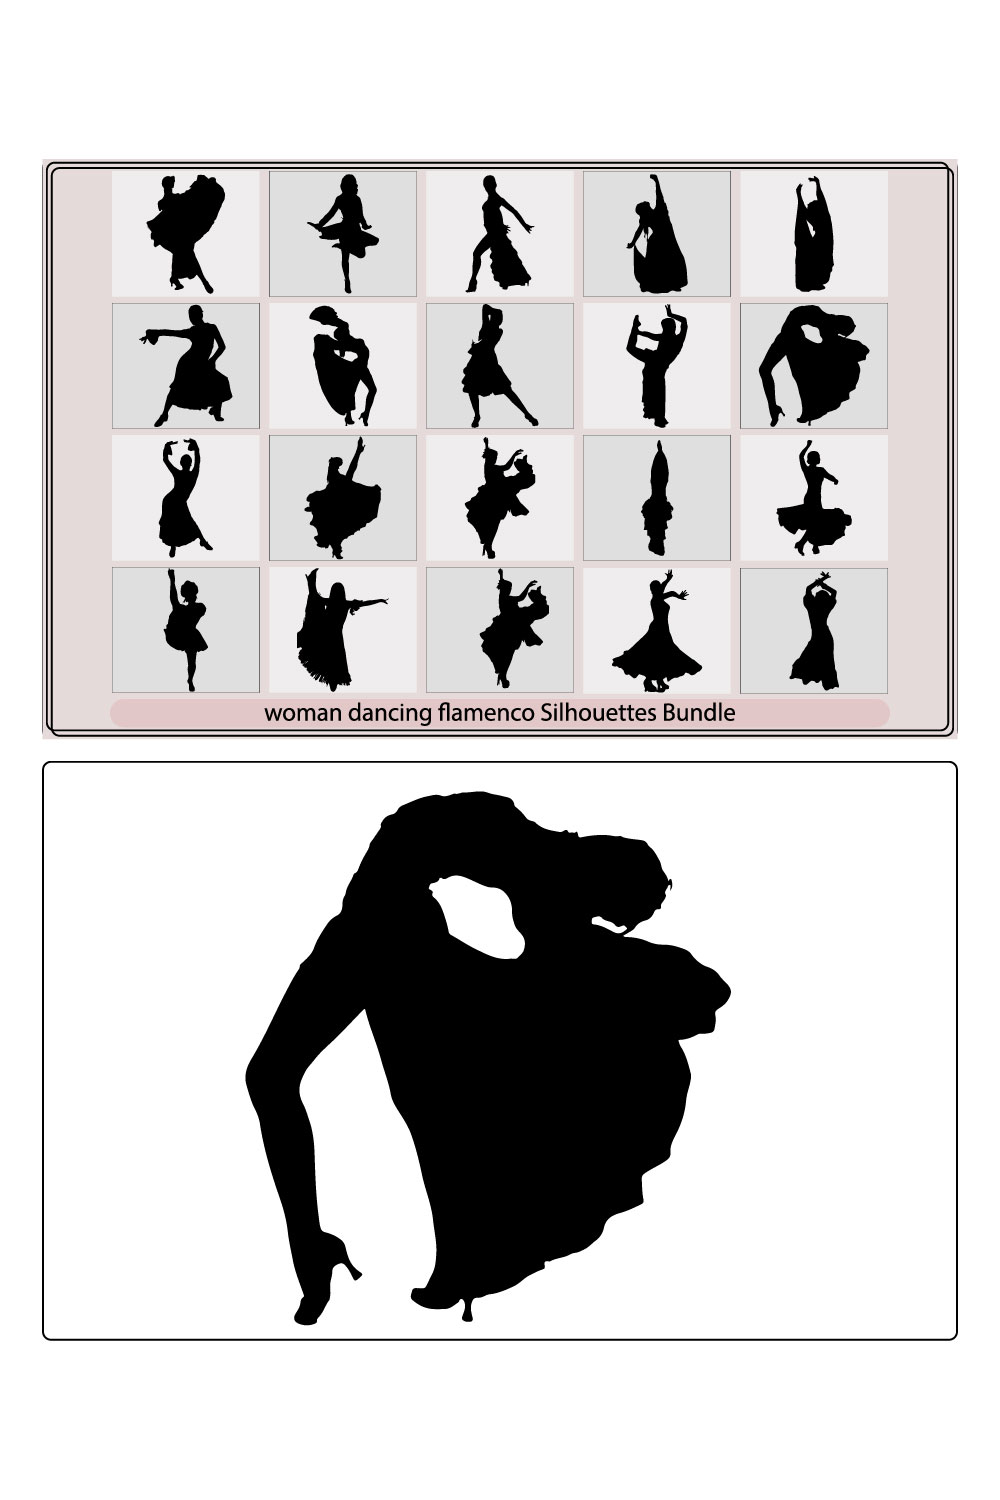 Women dancing flamenco and salsa vector silhouettes set,Vector silhouette flamenco dancer pinterest preview image.